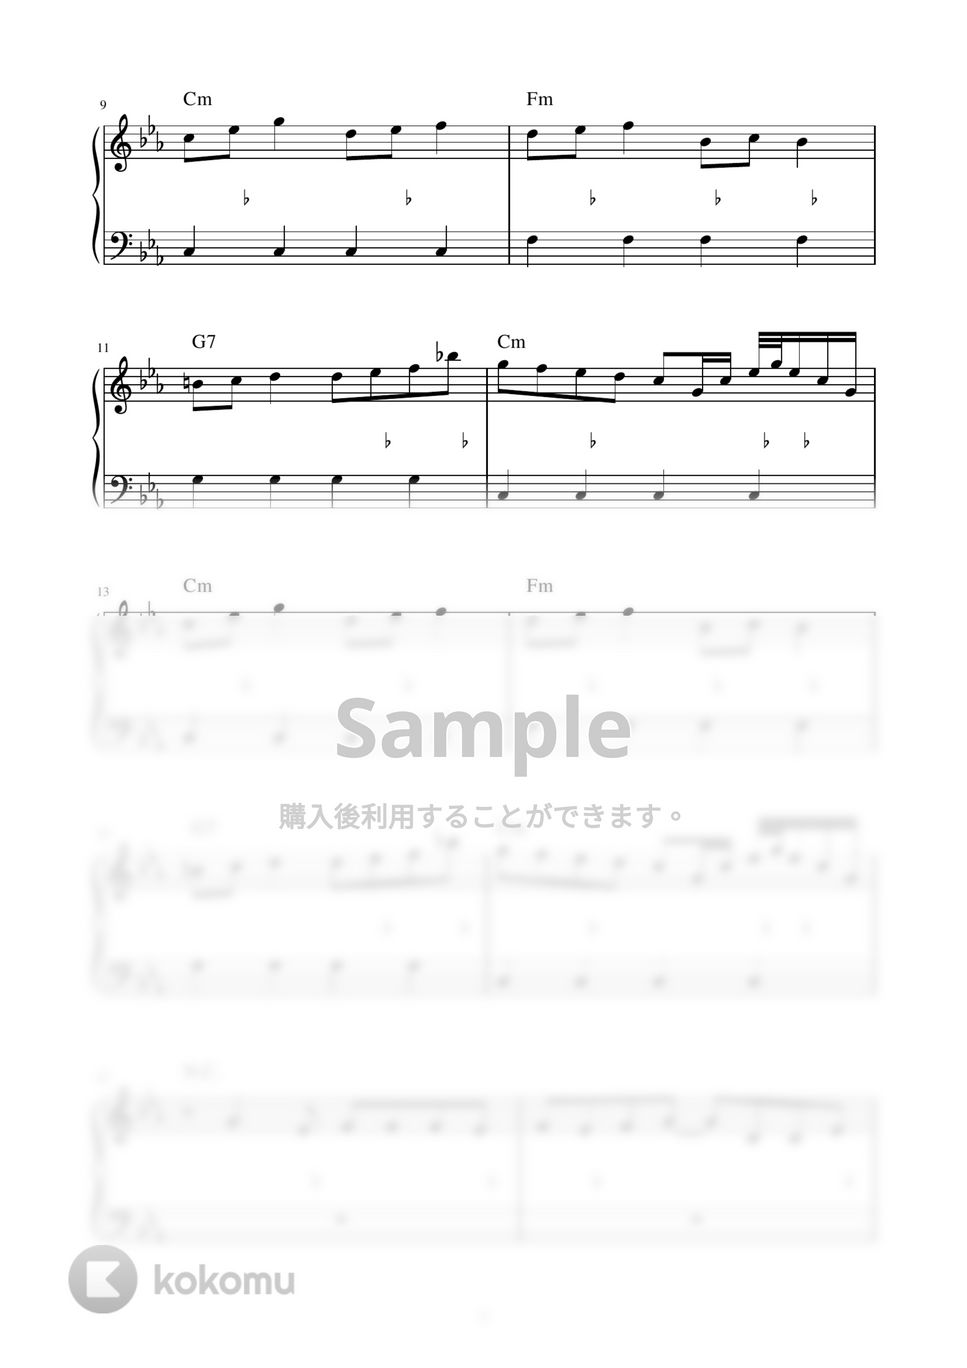 Kanaria feat. GUMI - QUEEN (ピアノ楽譜 / かんたん両手 / 歌詞付き / ドレミ付き / 初心者向き) by piano.tokyo